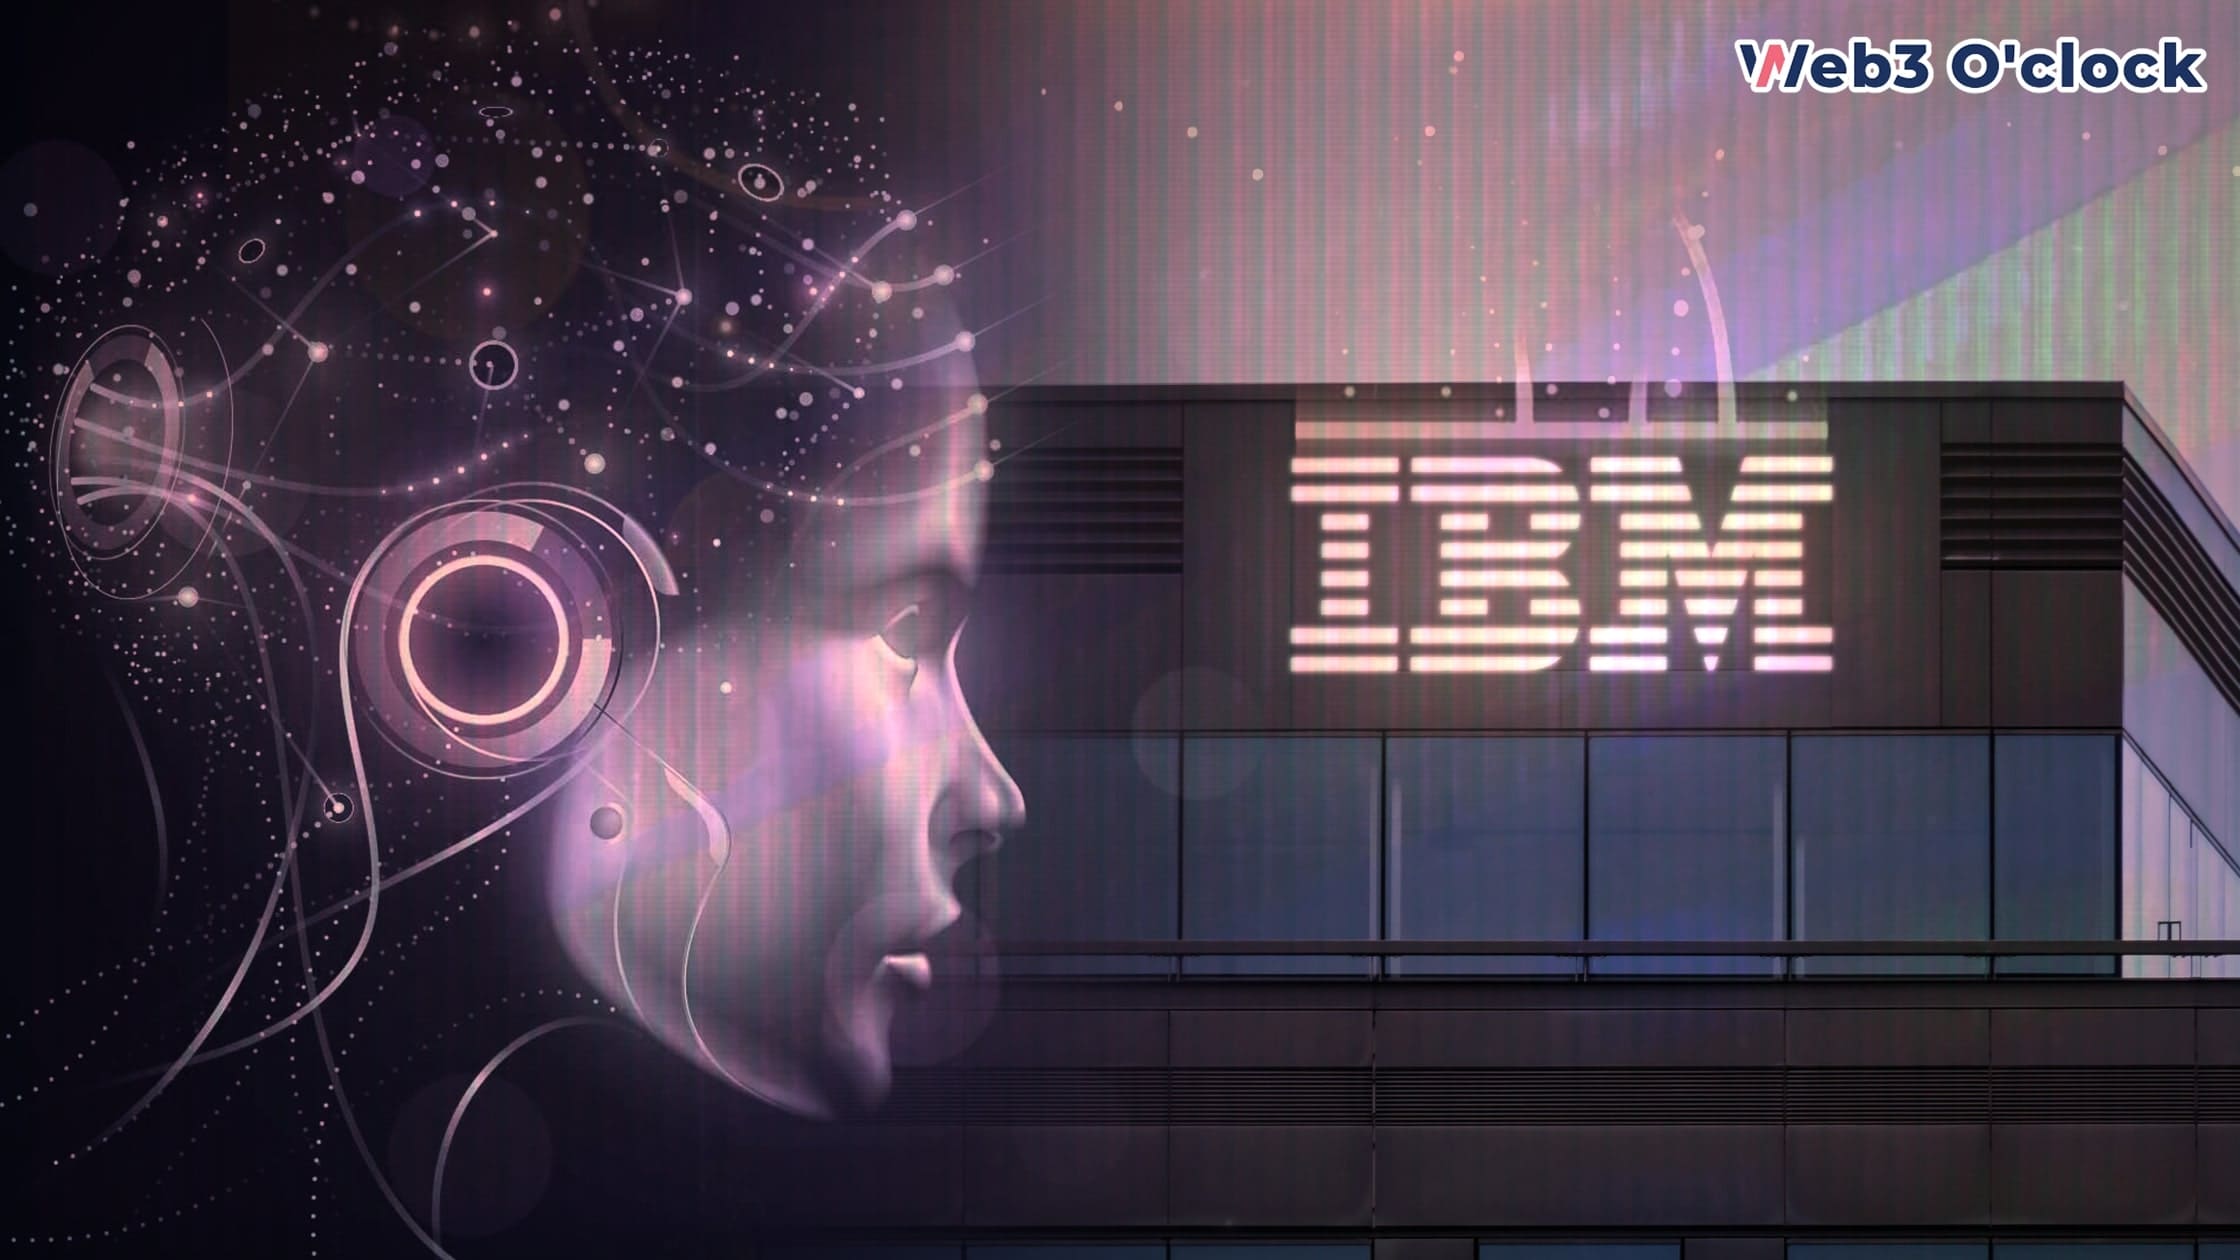 IBM Launches $500 Million Enterprise AI Venture Fund by Web3 O'clock